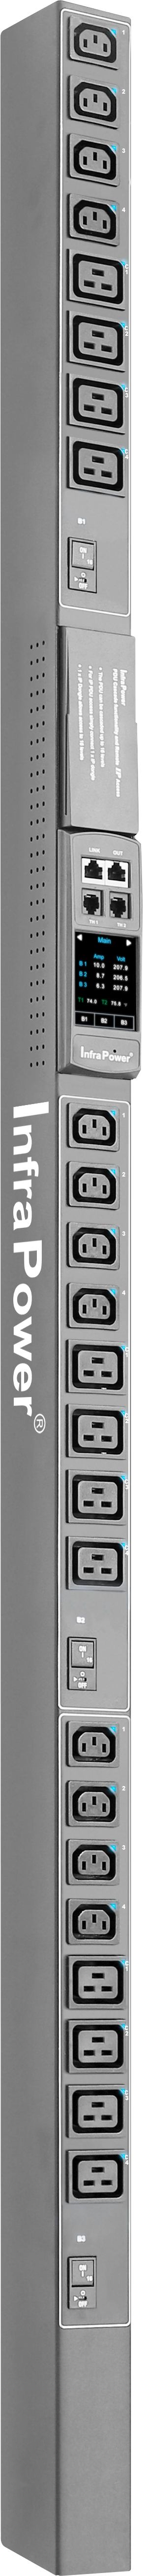 InfraPower 3-Phase Intelligent PDU